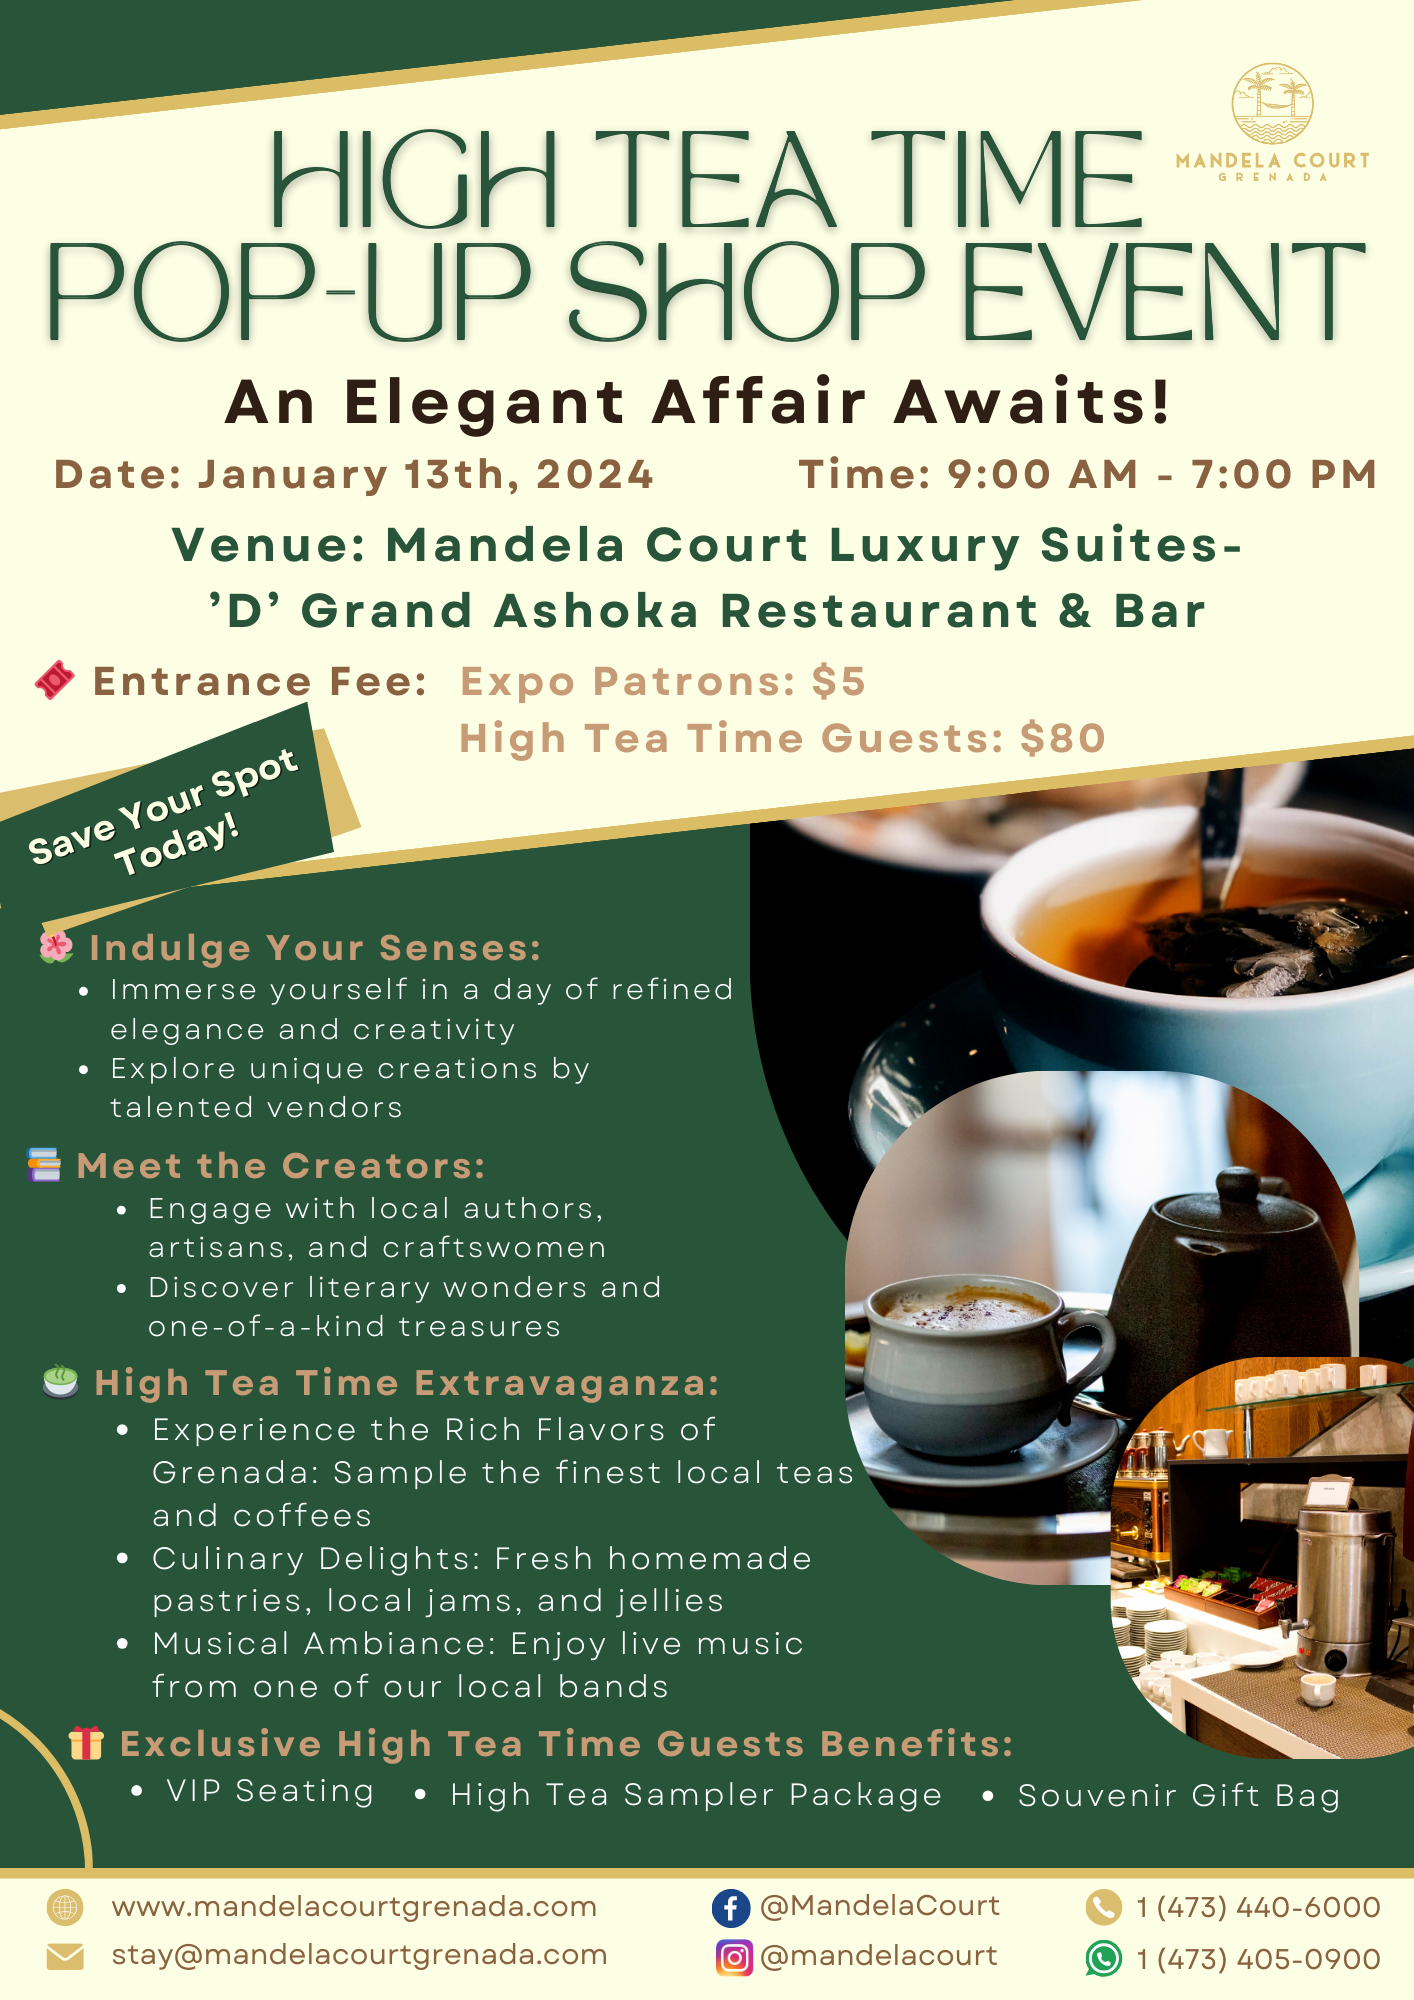 High Tea Time at Mandela Court Luxury Suites